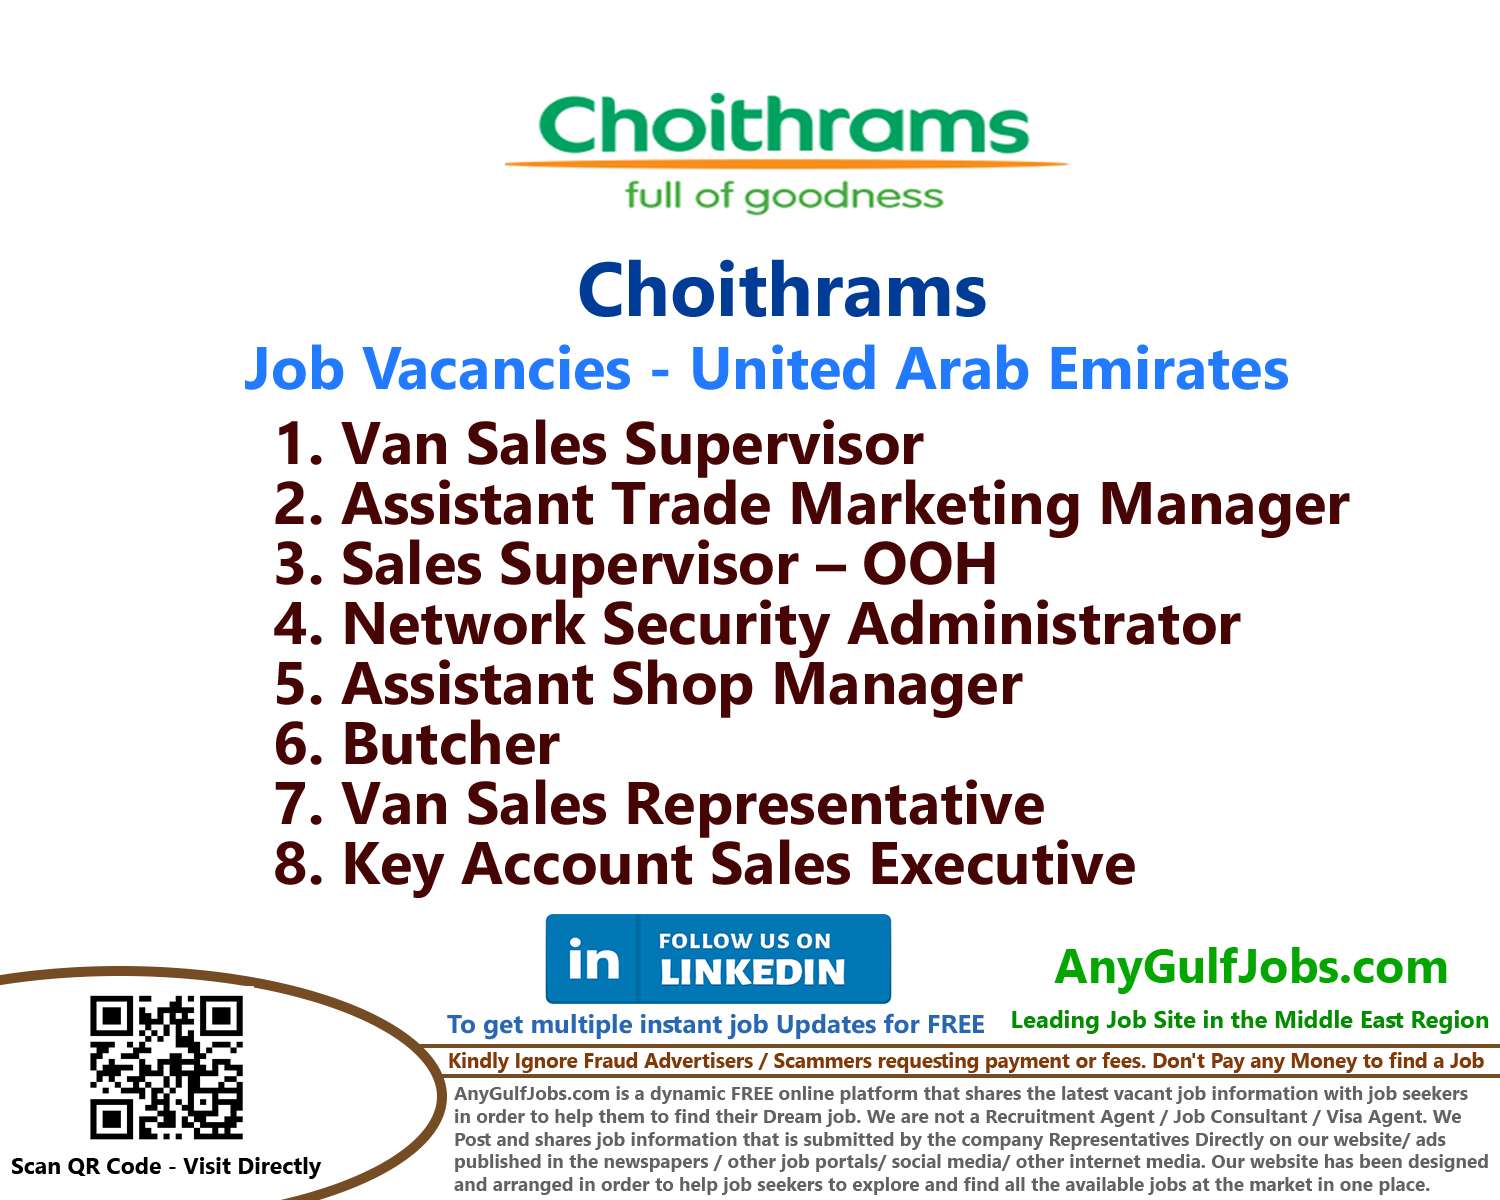 Choithrams Job Vacancies - United Arab Emirates